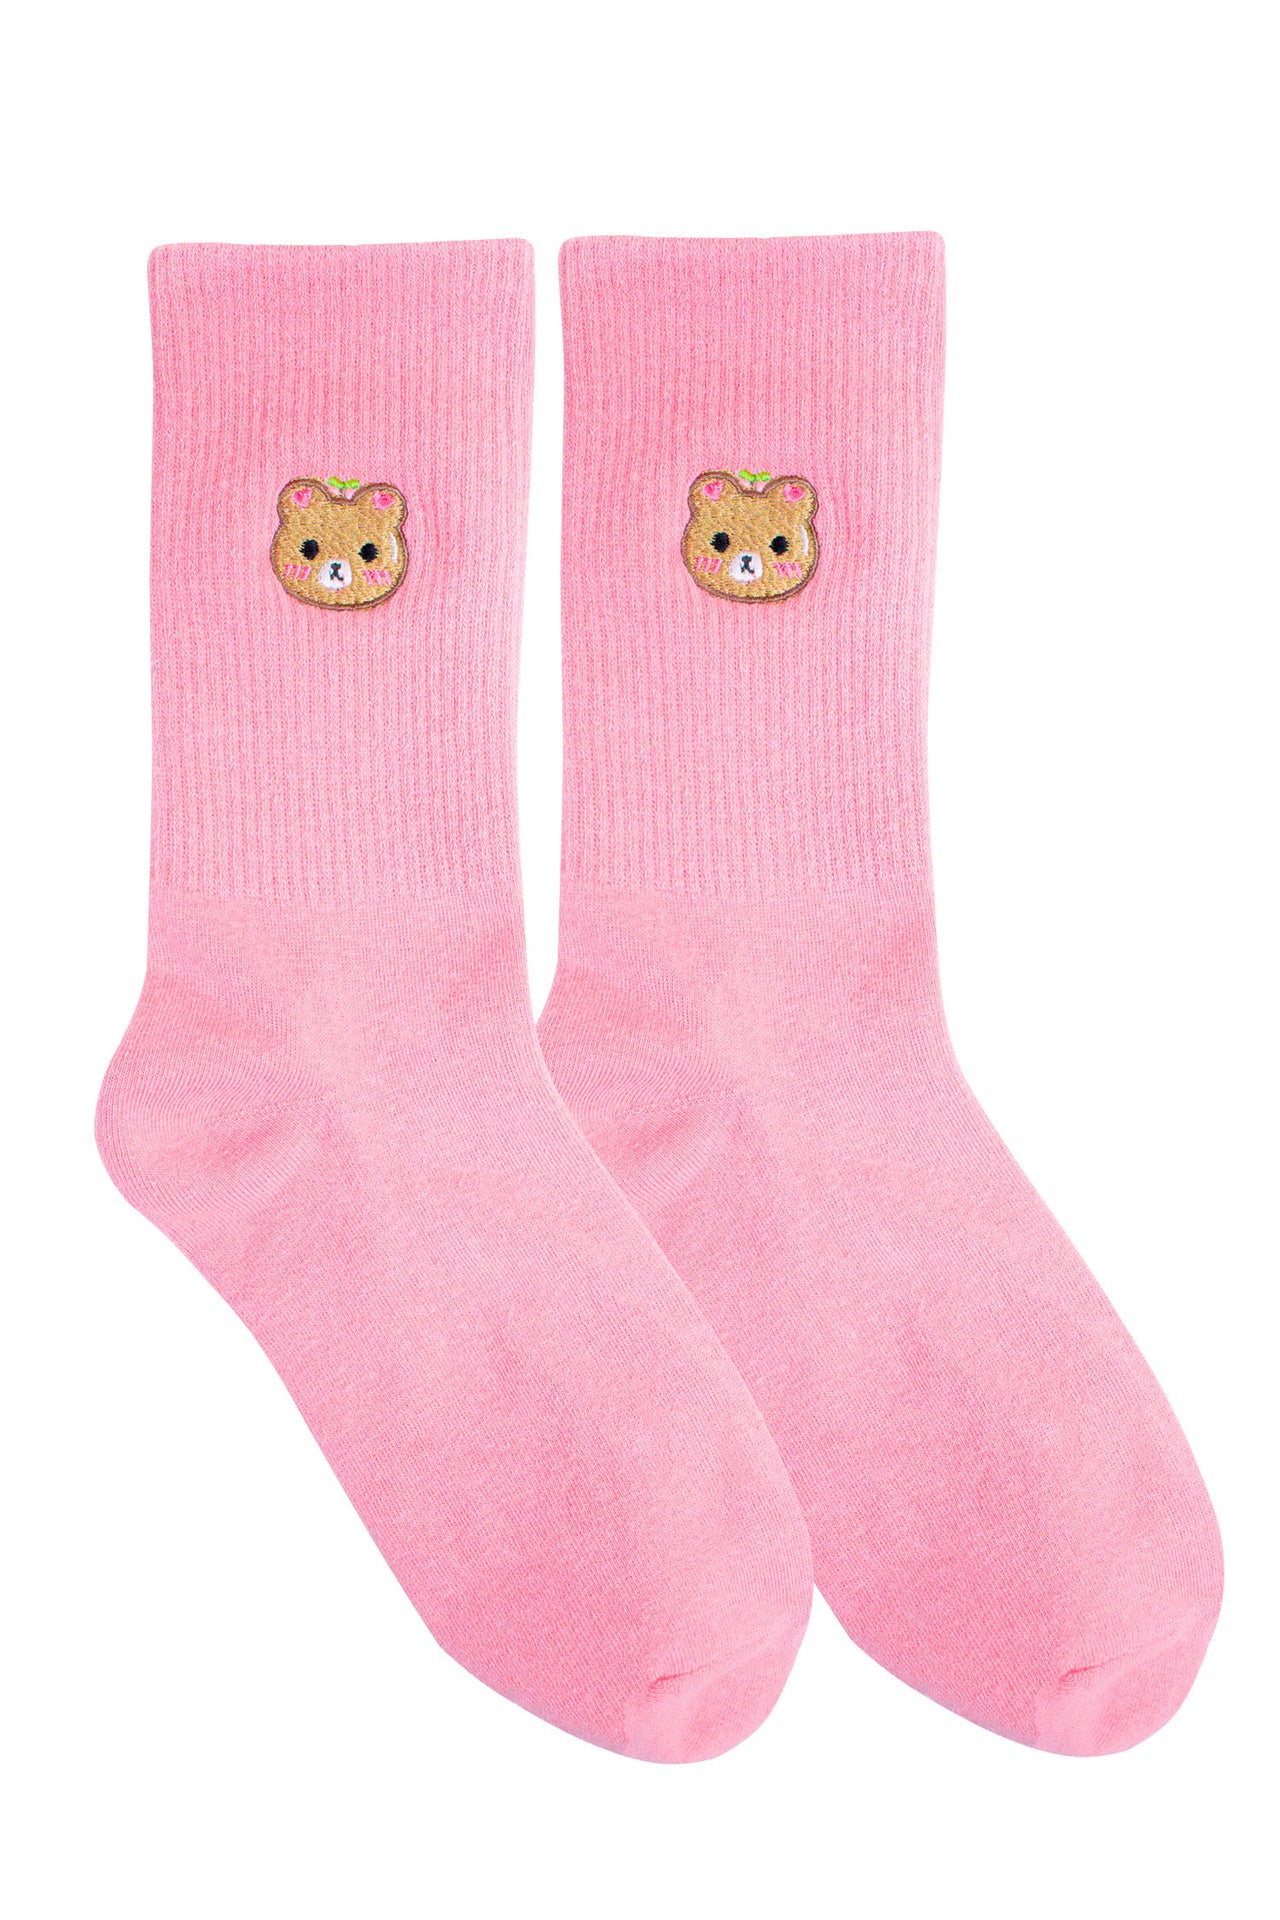 Bear Seedling Embroidered Socks - Momokakkoii